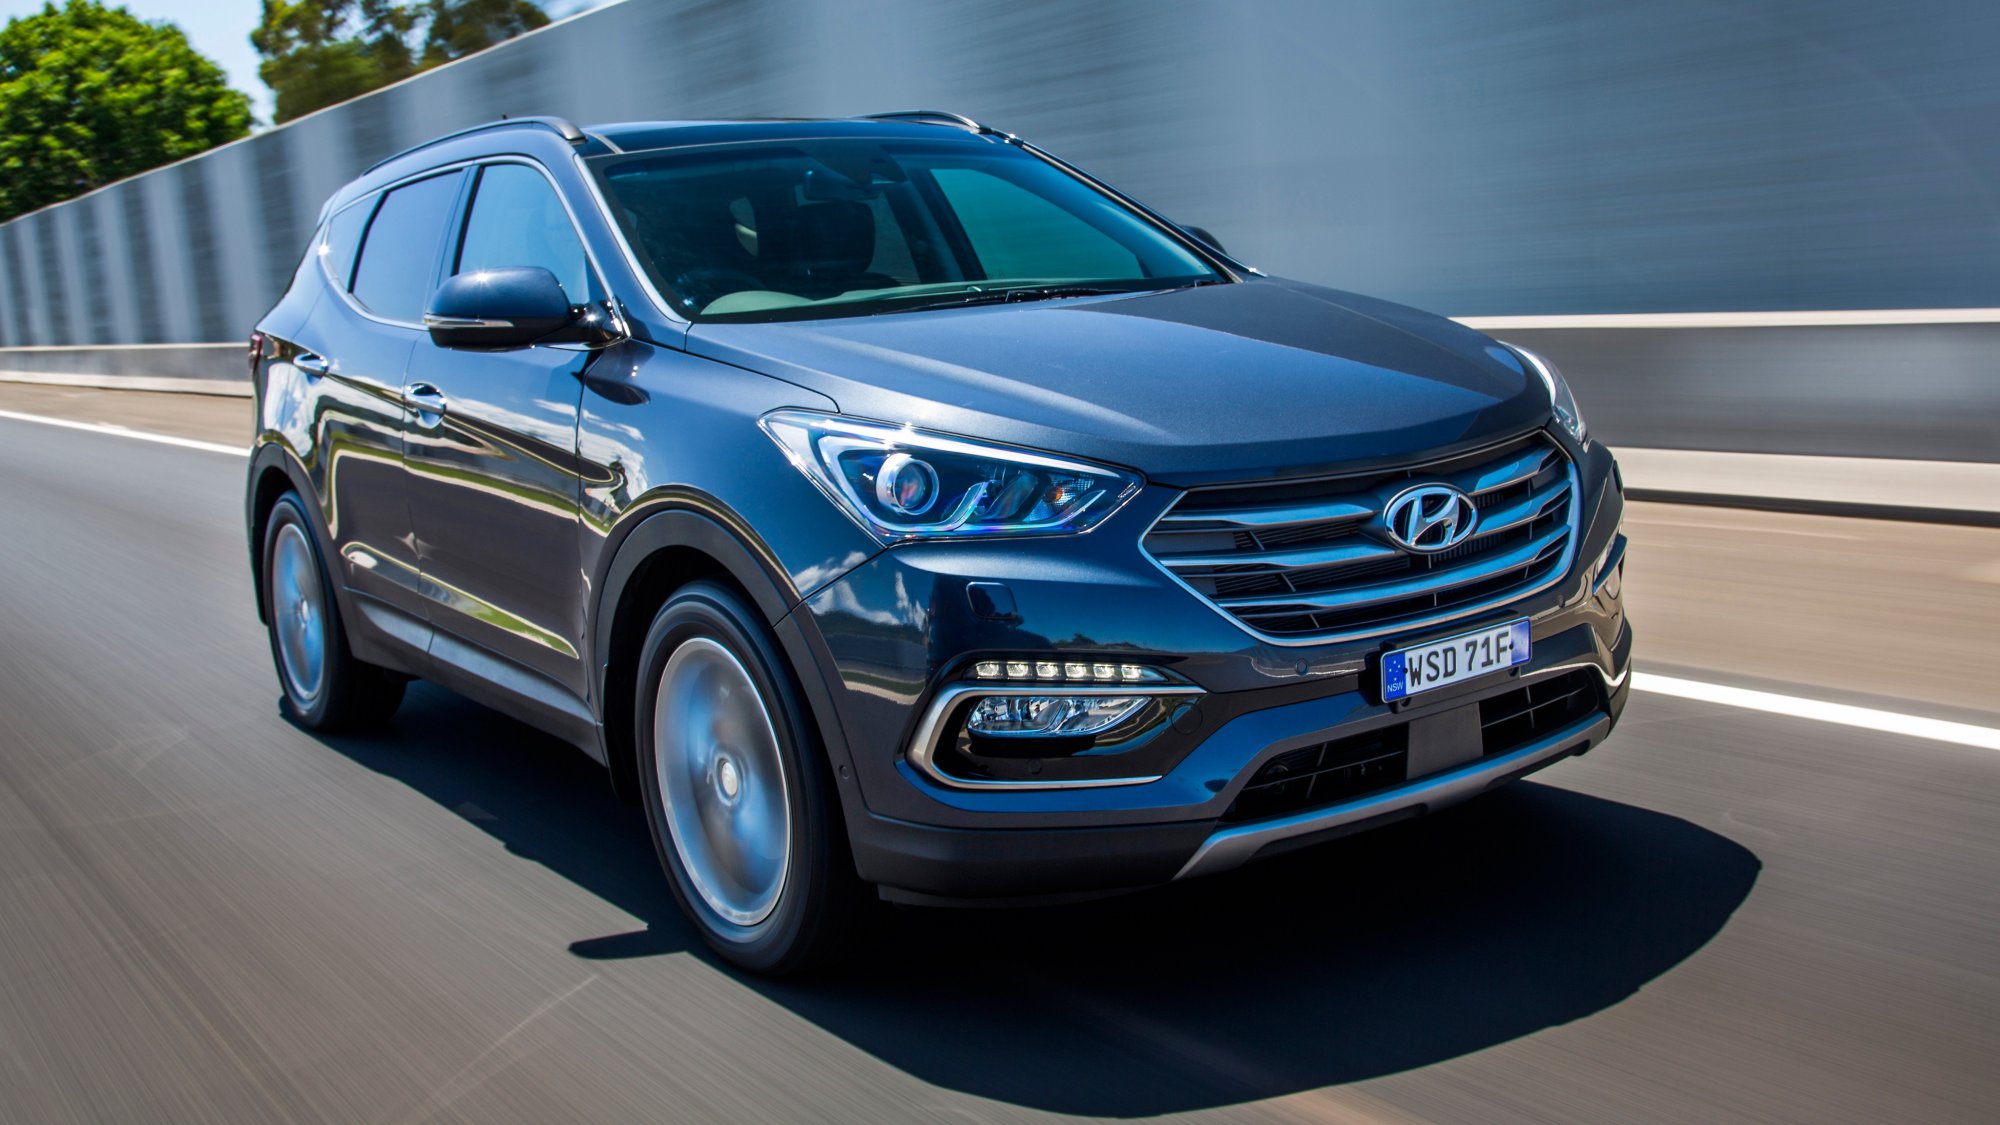 News Hyundai Updates Santa Fe For 2018, Safer & Smarter